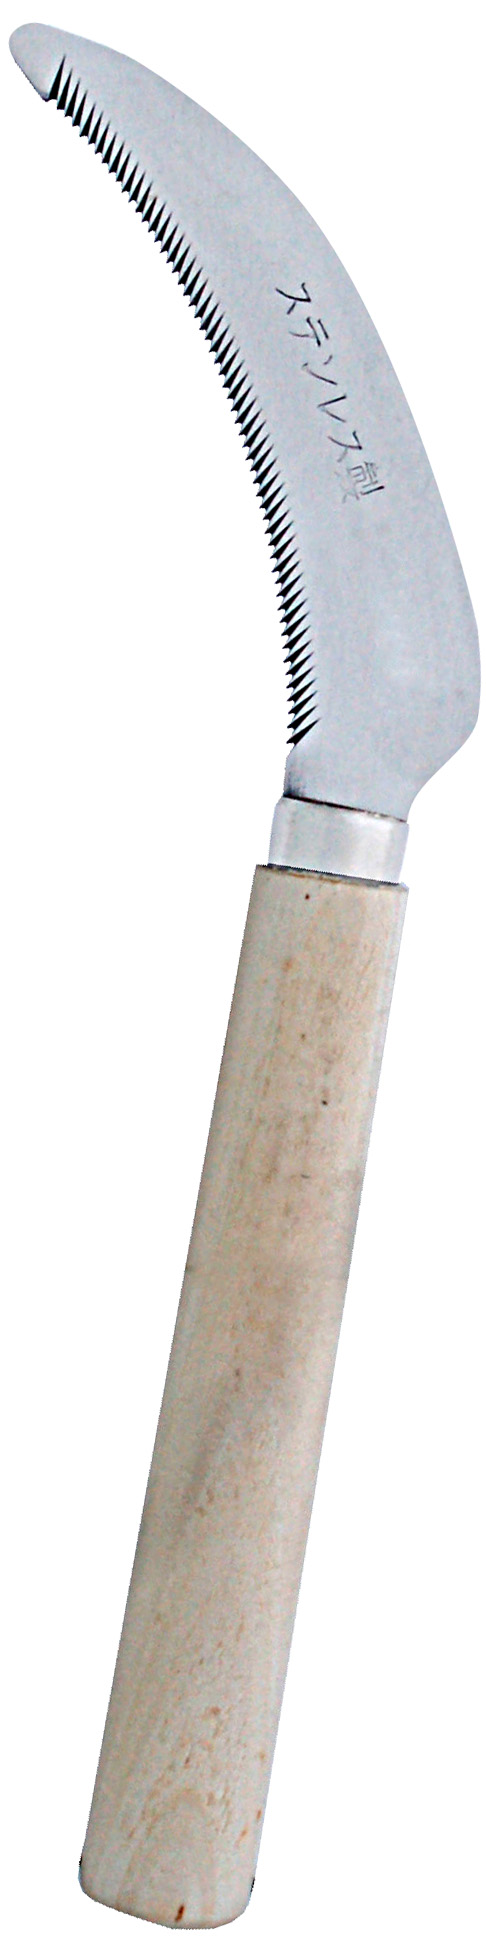 Zenport Sickle K206B3 Berry Knife/Weeding Sickle, Wood Handle, A+ Grade, Stainless Steel, Deep Serration, 4.3-Inch Blade